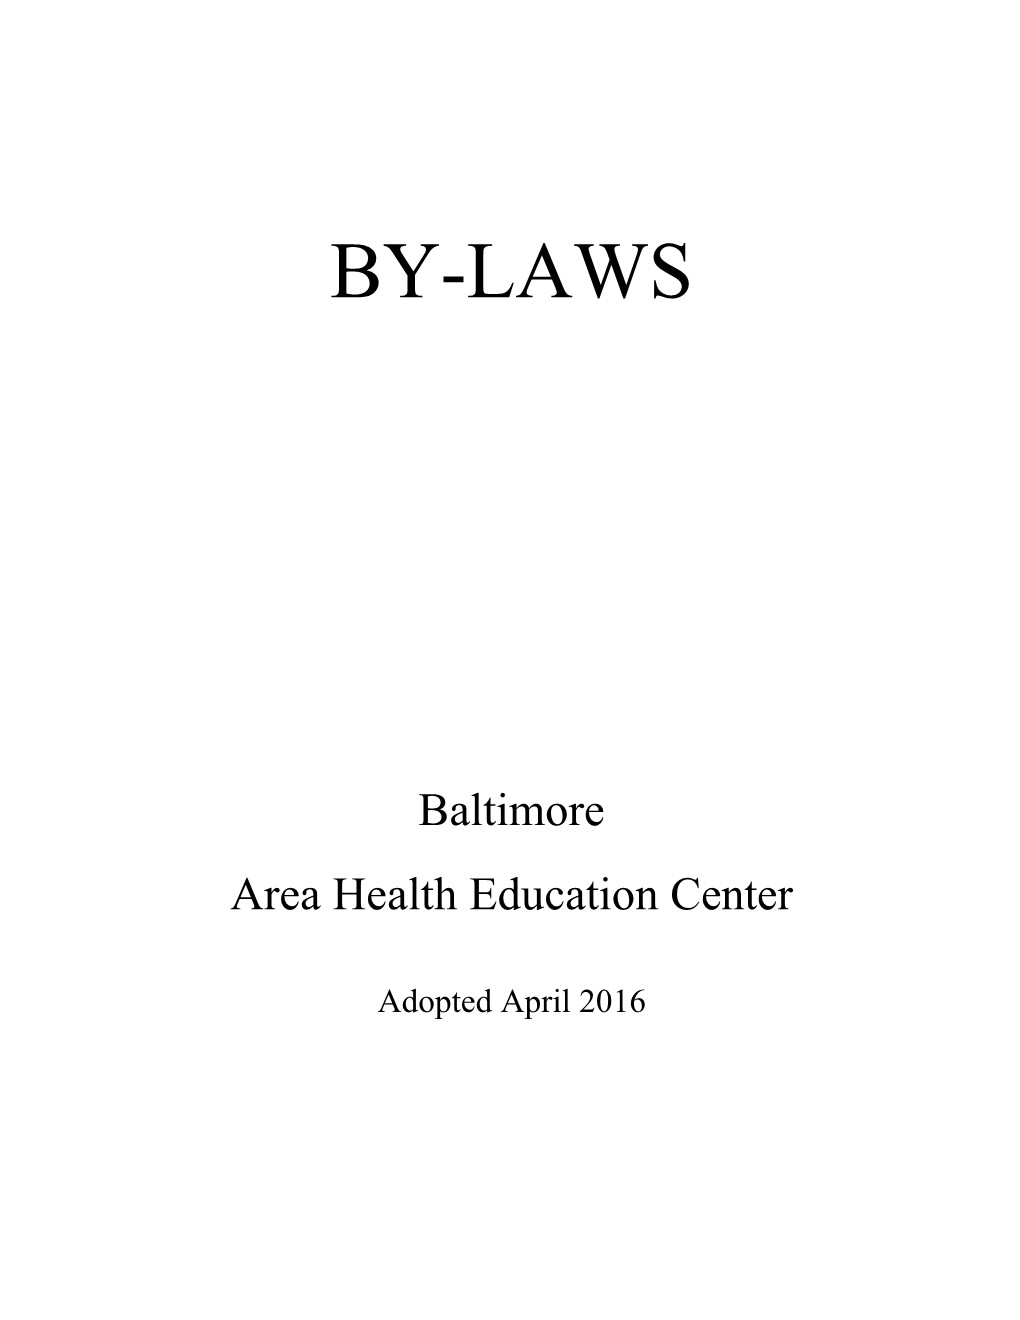 Baltimore Areahealth Educationcenter,Inc